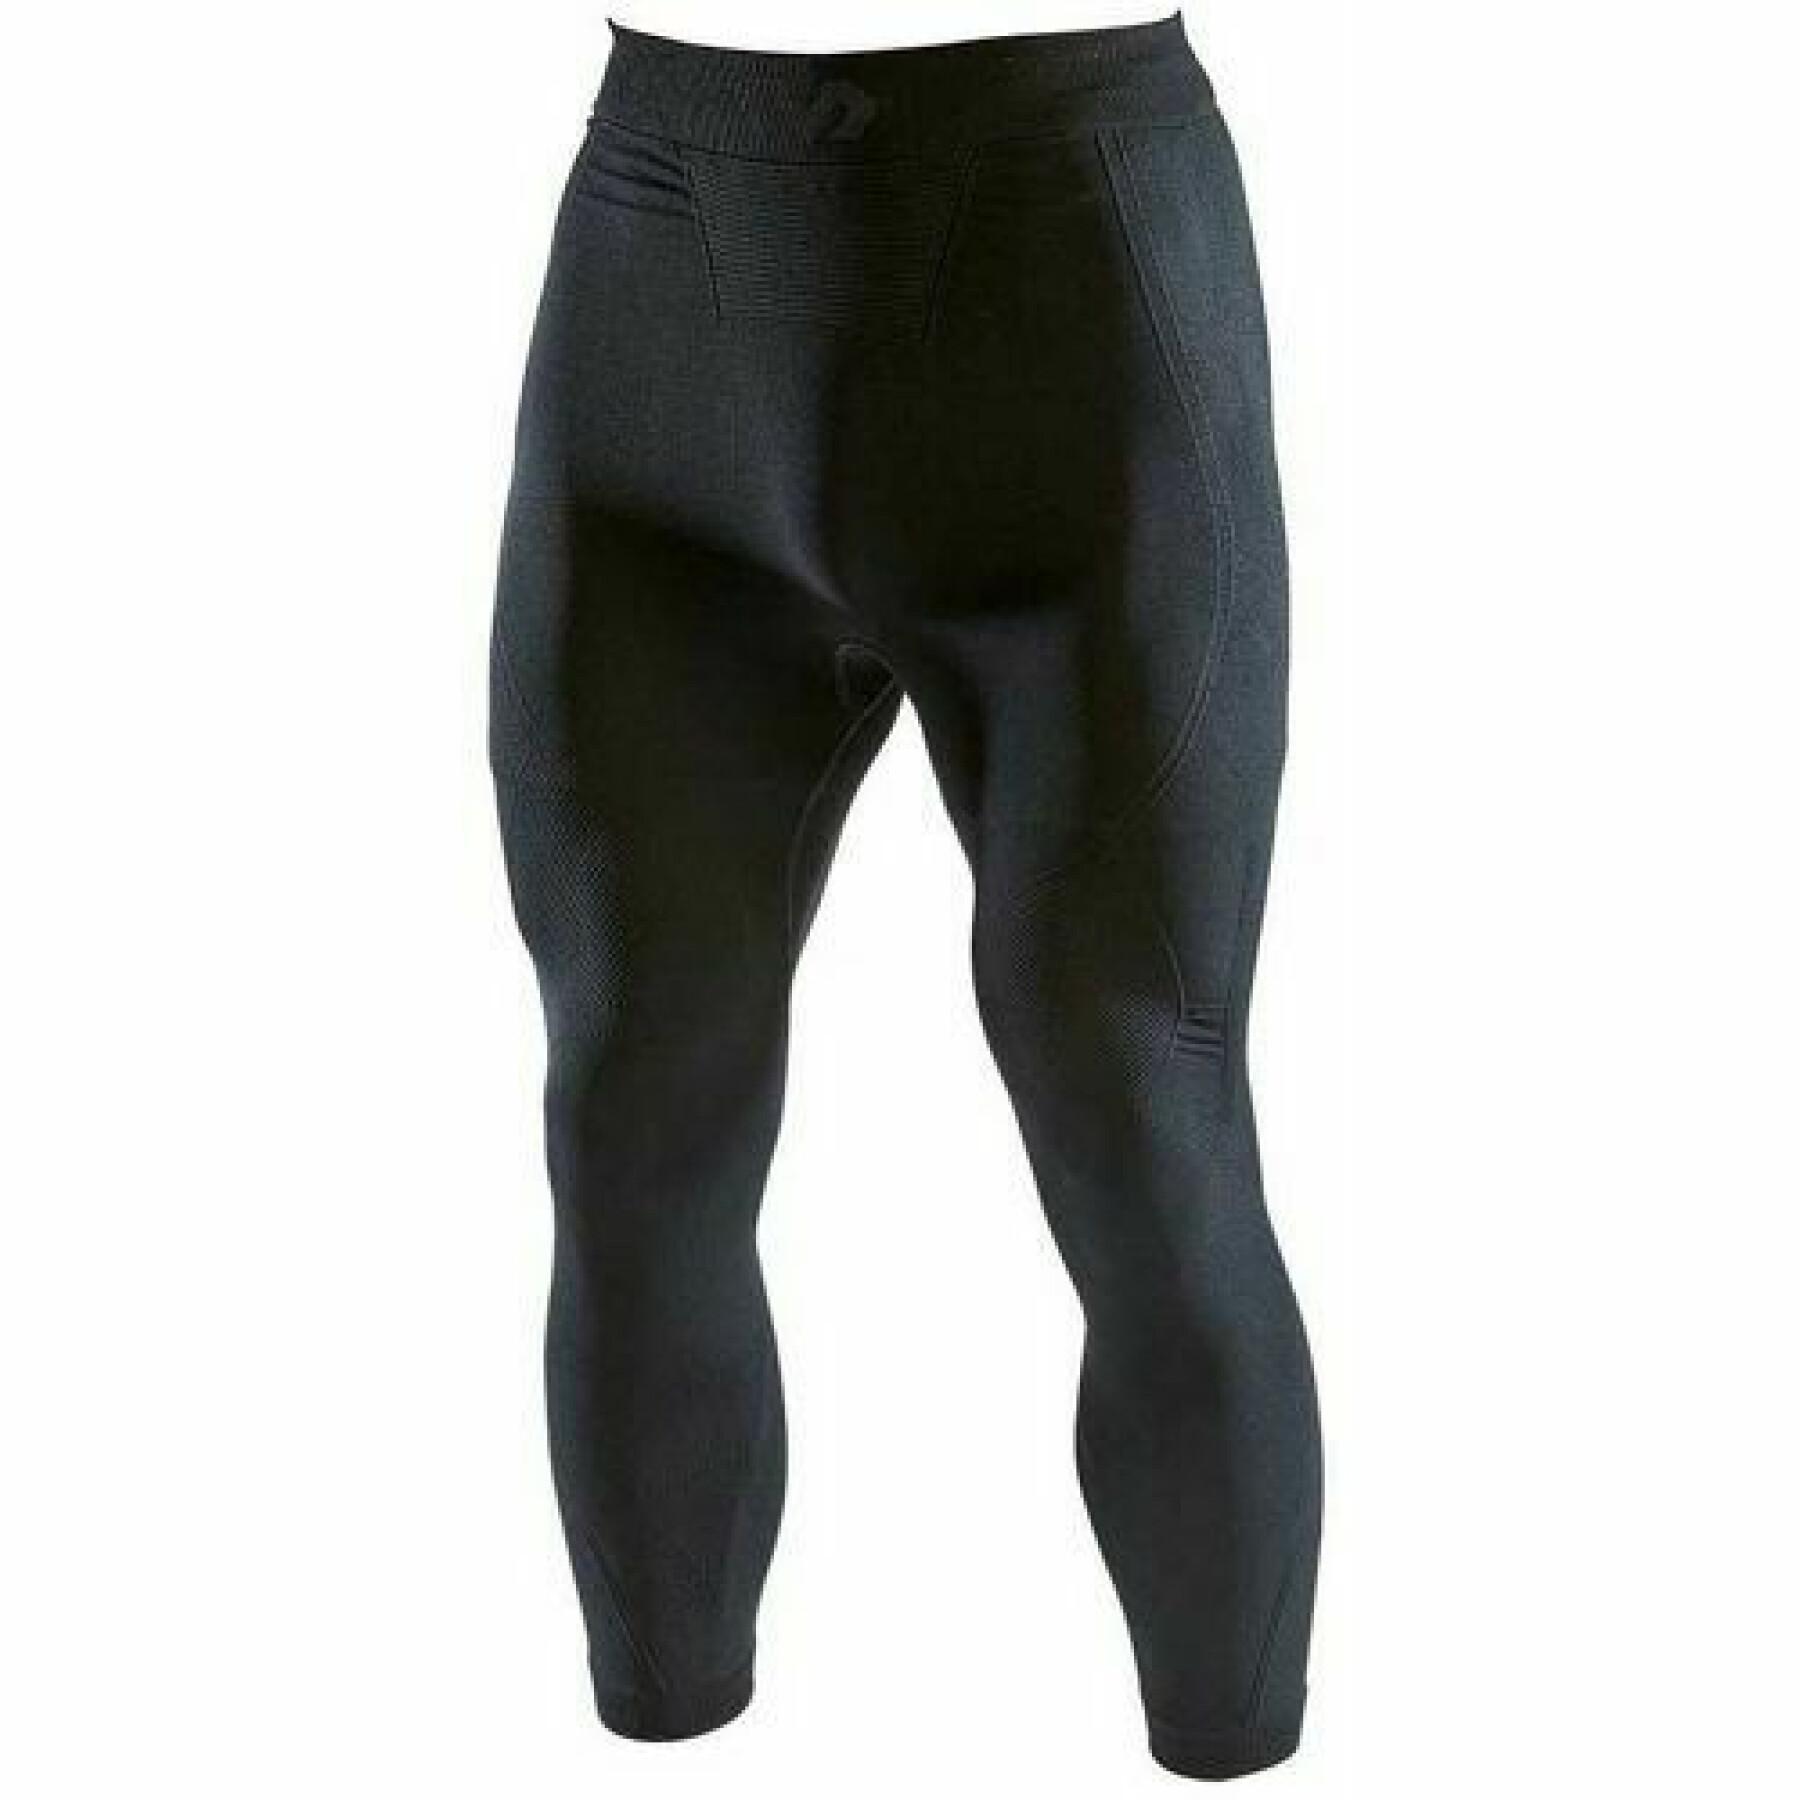 3/4 elite compression pants McDavid - Baselayers - Men's wear